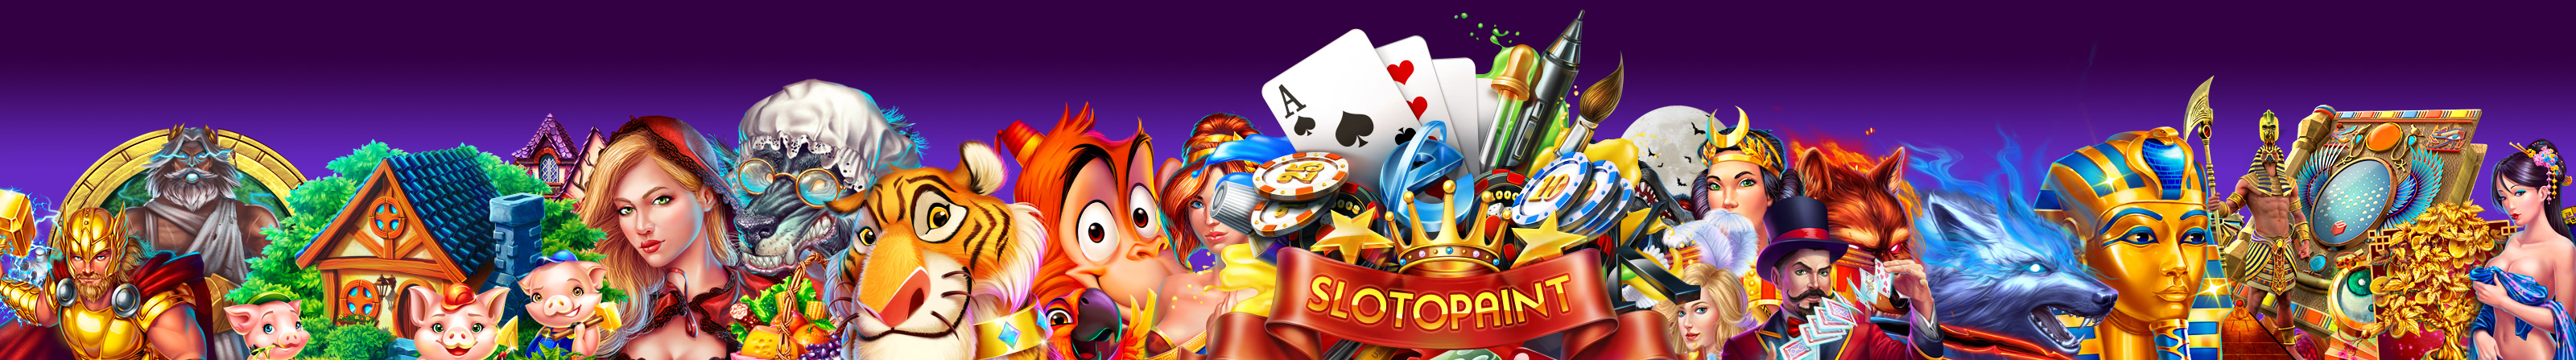 Banner profilu uživatele Slotopaint Game Design Studio